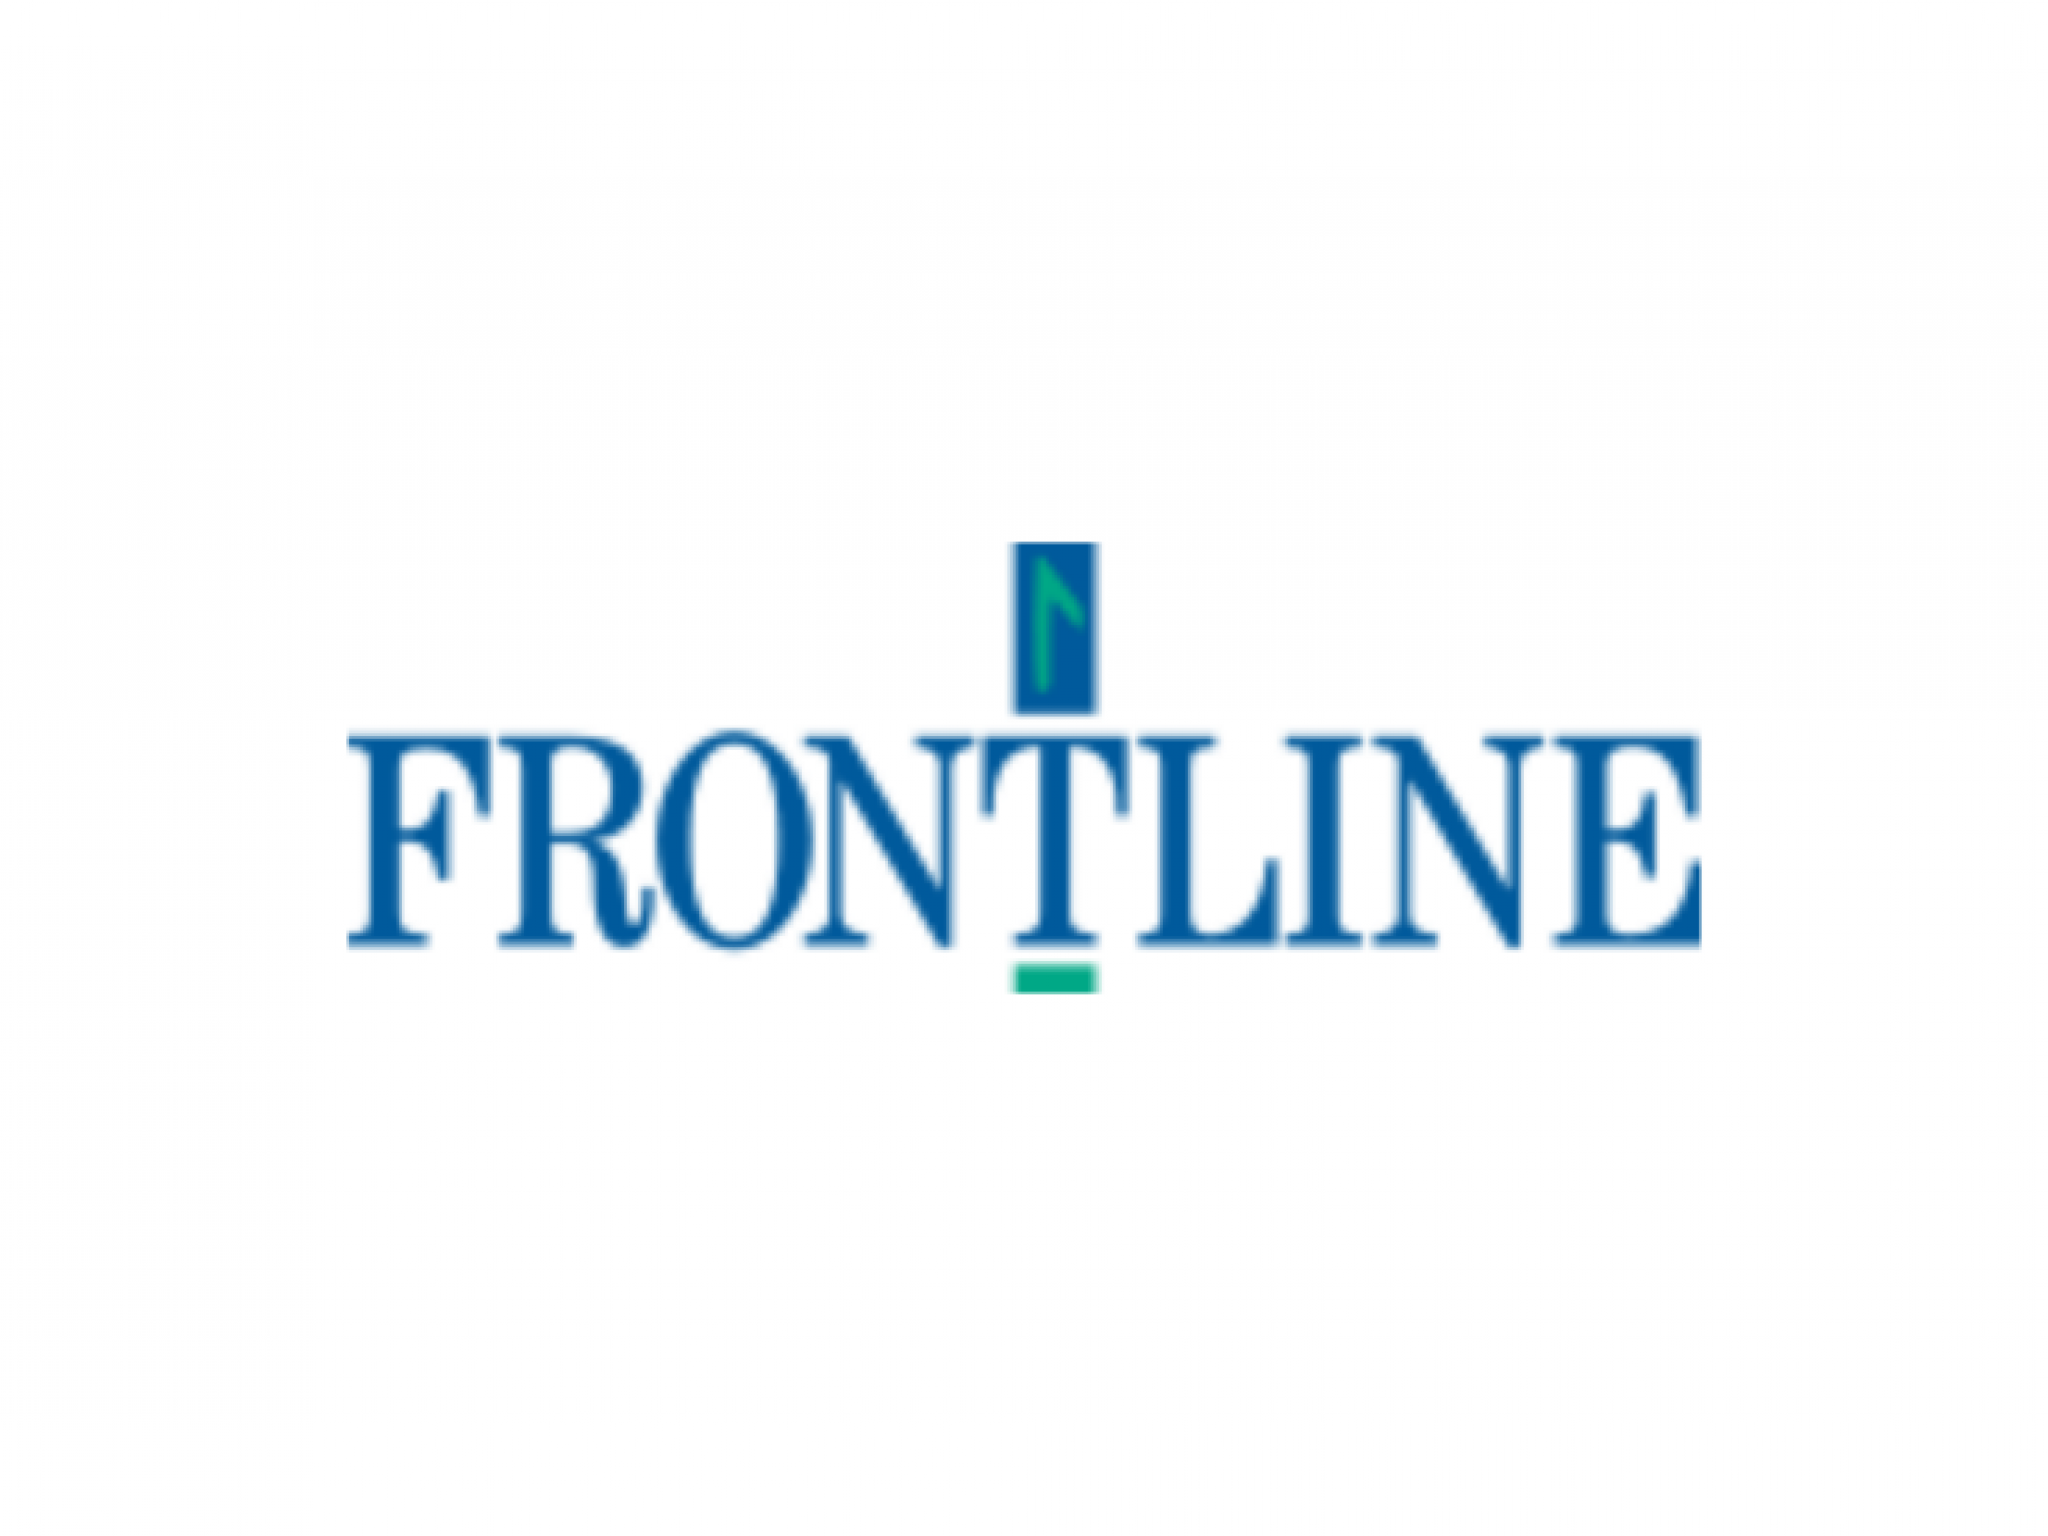  frontline-outperforms-q4-revenue-estimates-strategic-asset-sales-and-refinancing-bolster-financial-position 